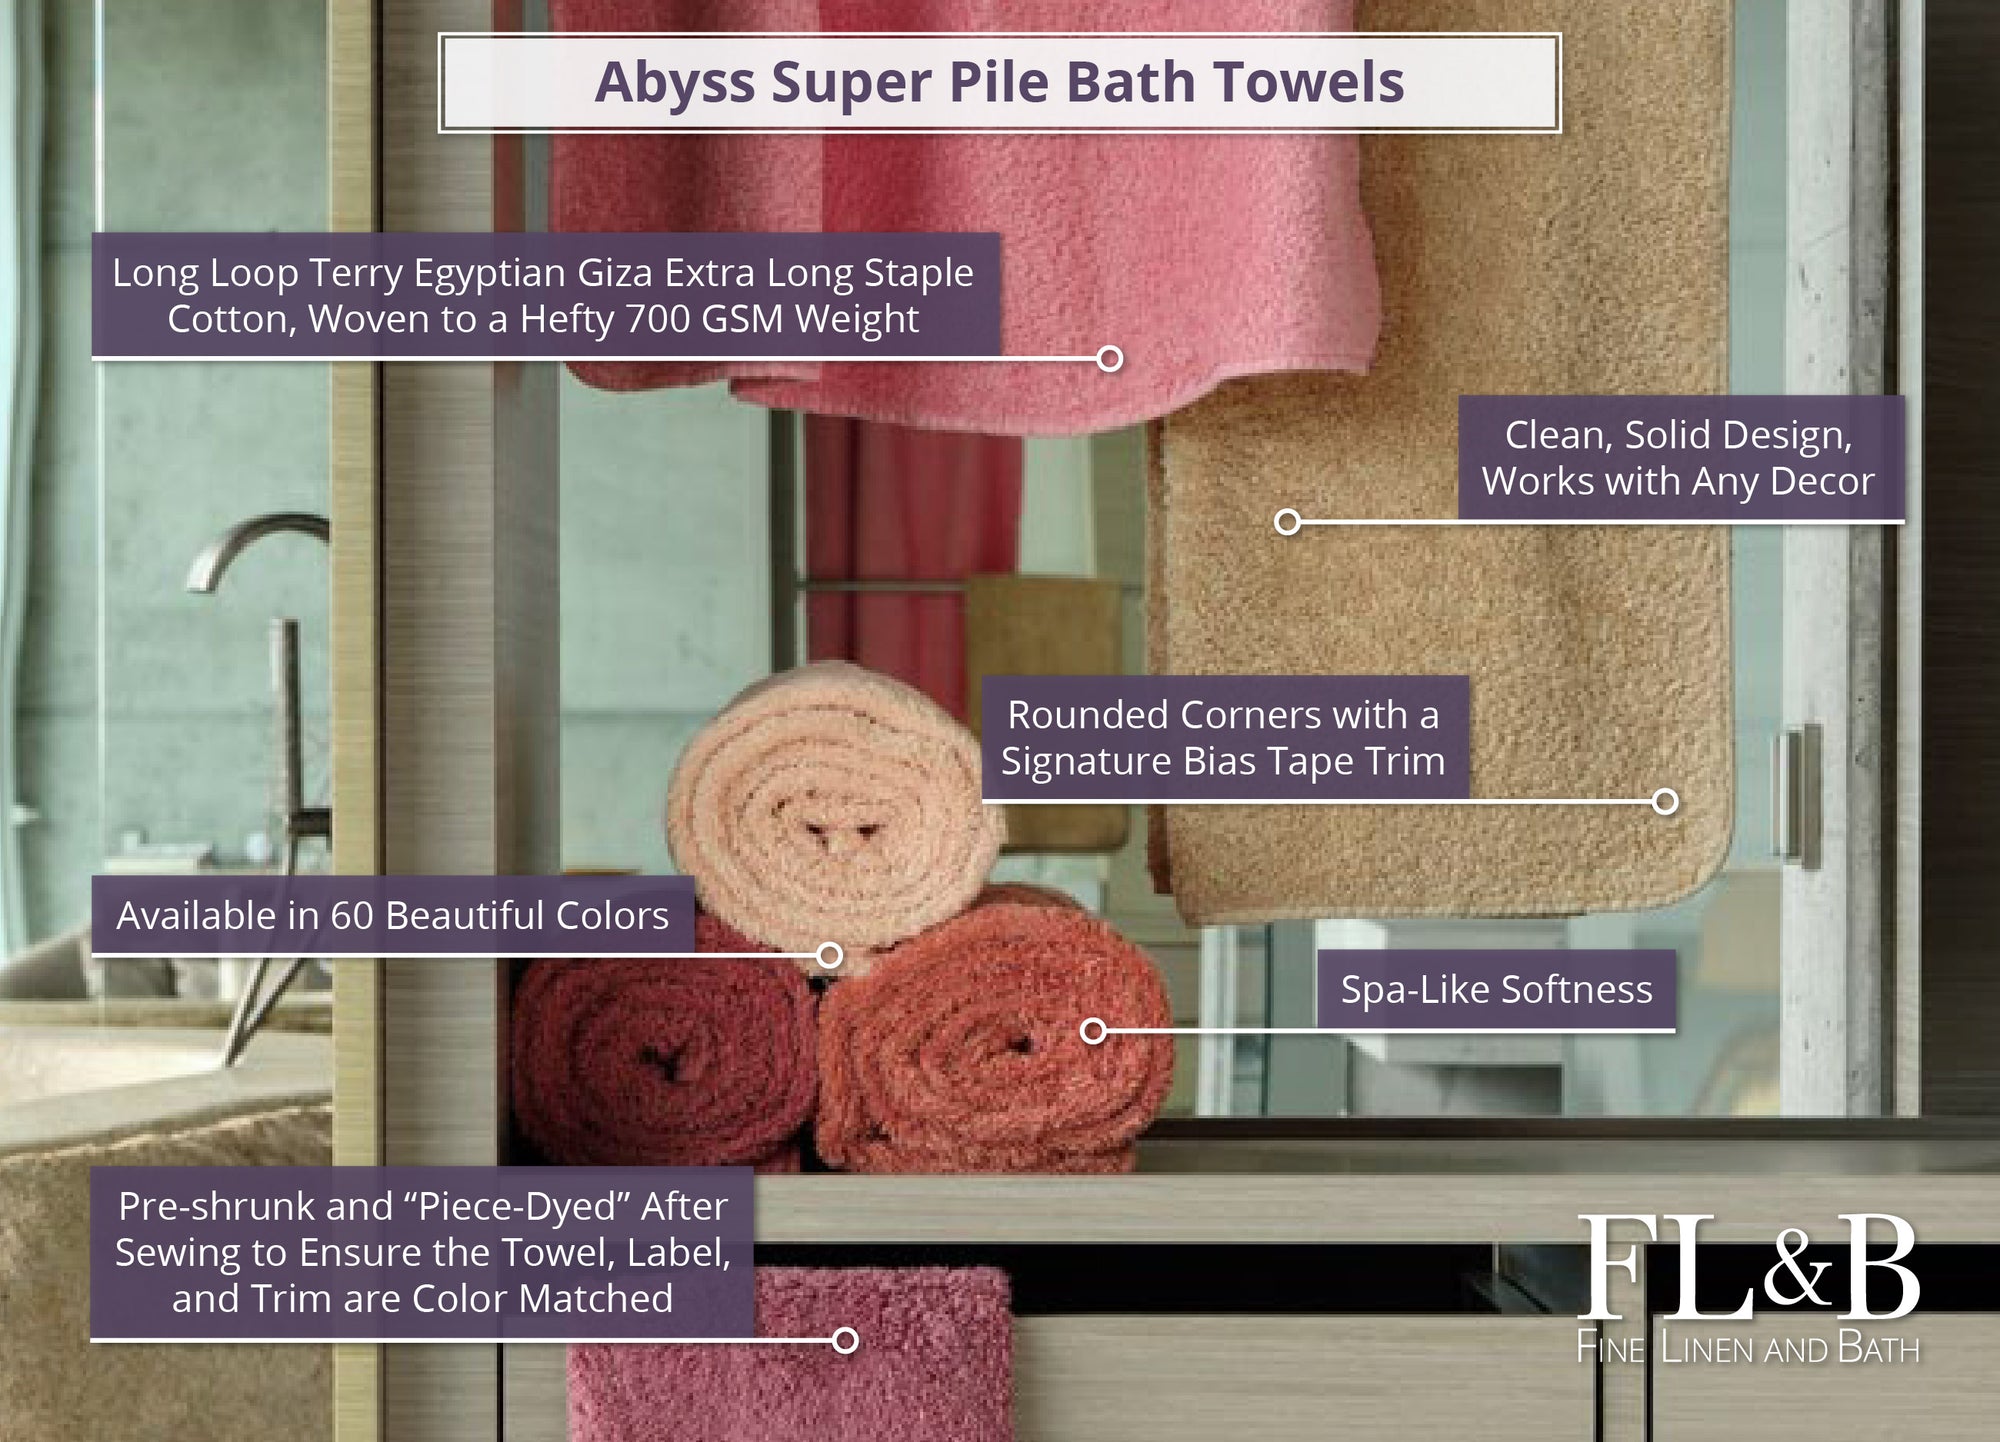 Abyss Super Pile Bath Towel Detailed Description with Image Graphics Infographic Titles